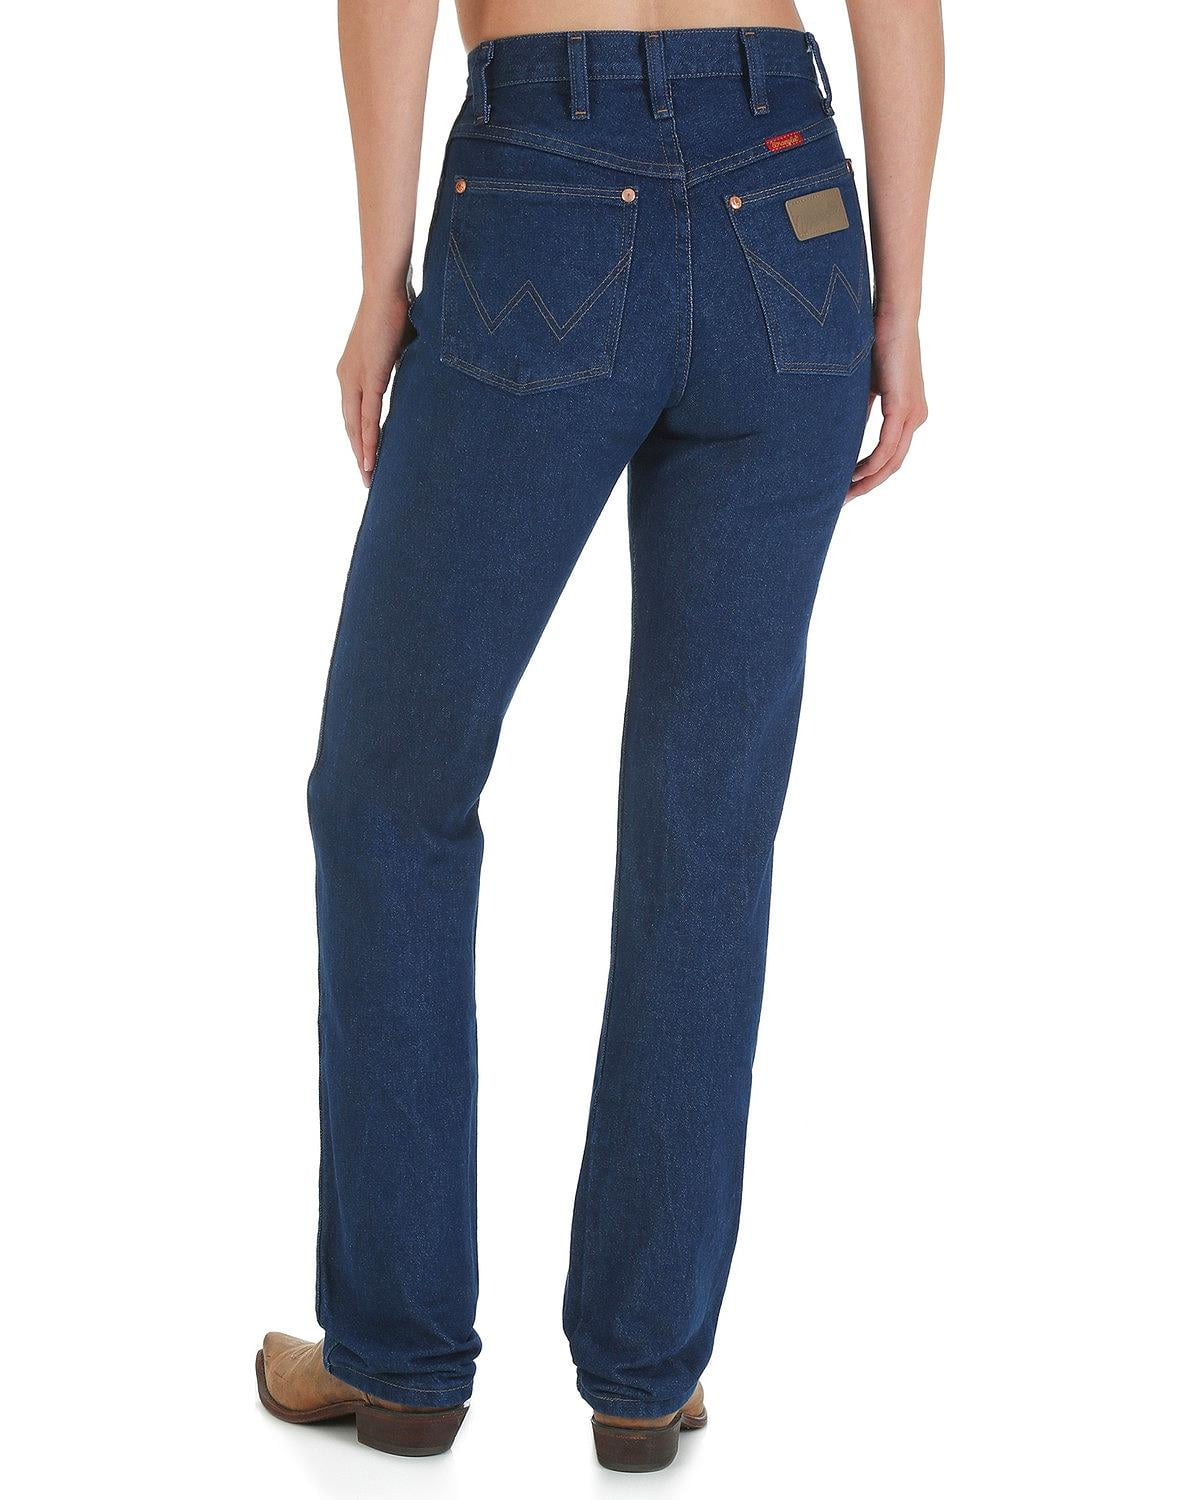 Wrangler Men's Camo Jeans